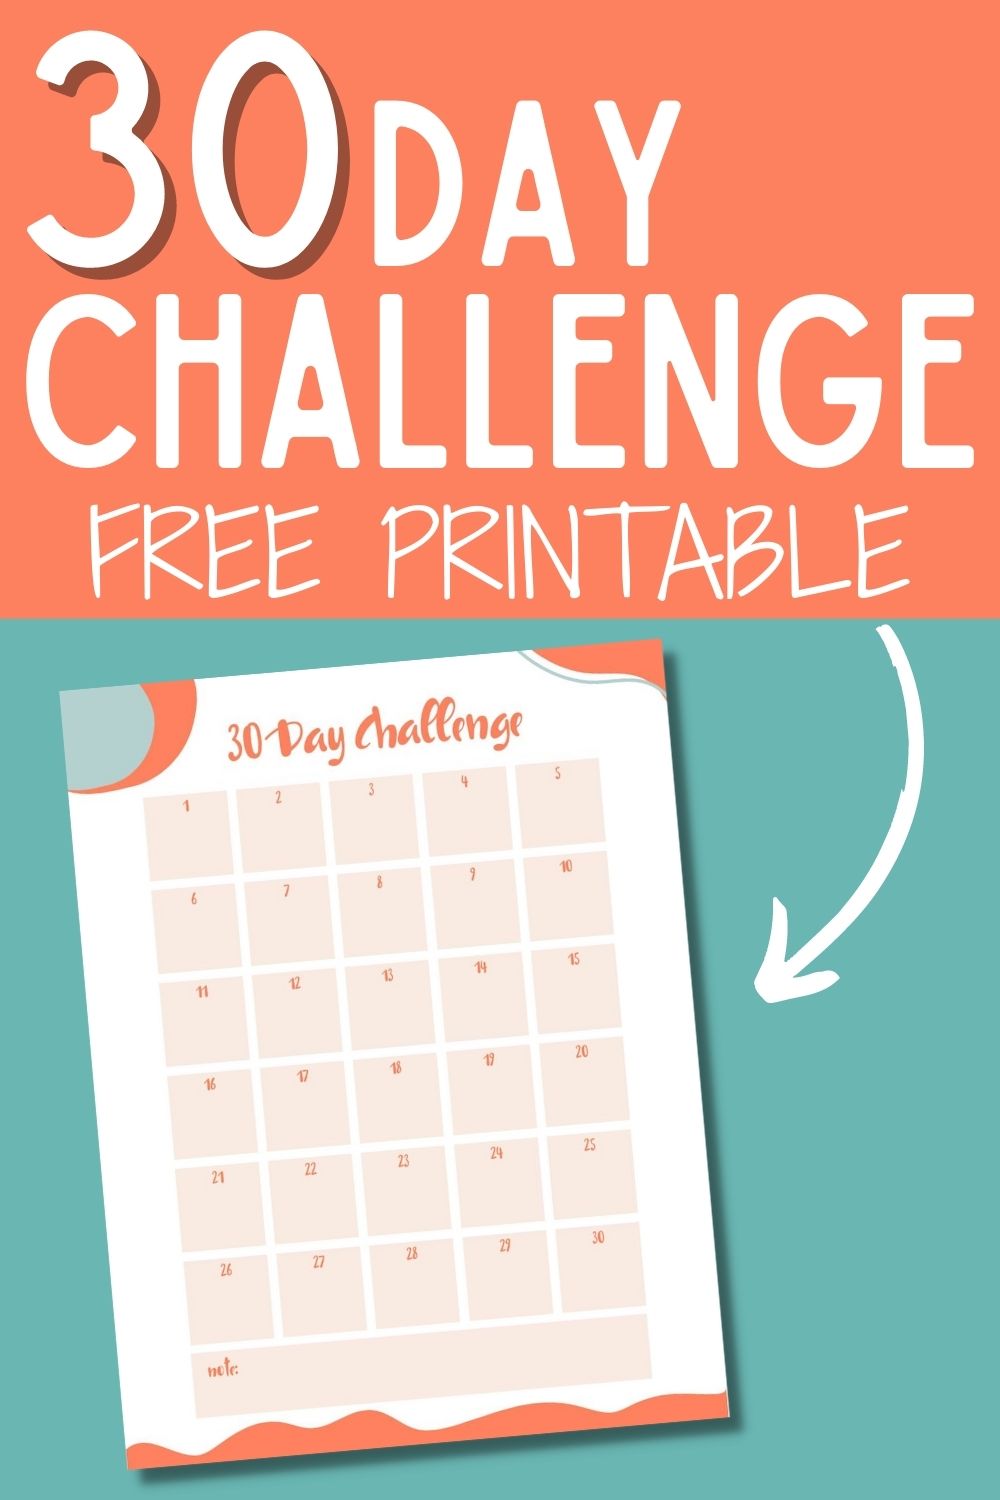 Free Printable 30 Day Challenge Calendar - OriginalMOM